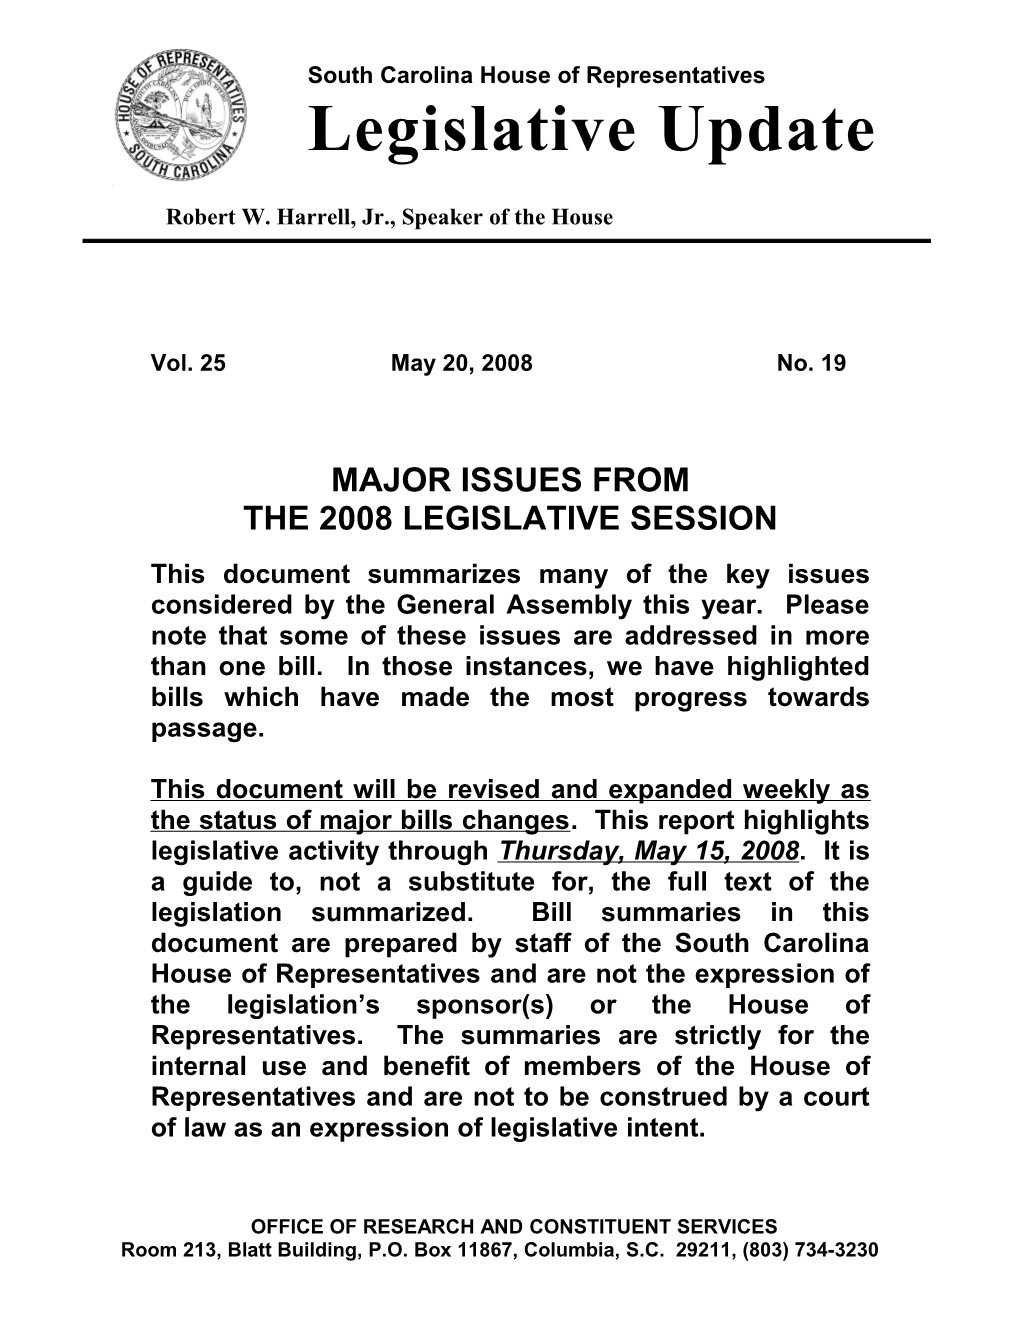 Legislative Update - Vol. 25 No. 19 May 20, 2008 - South Carolina Legislature Online